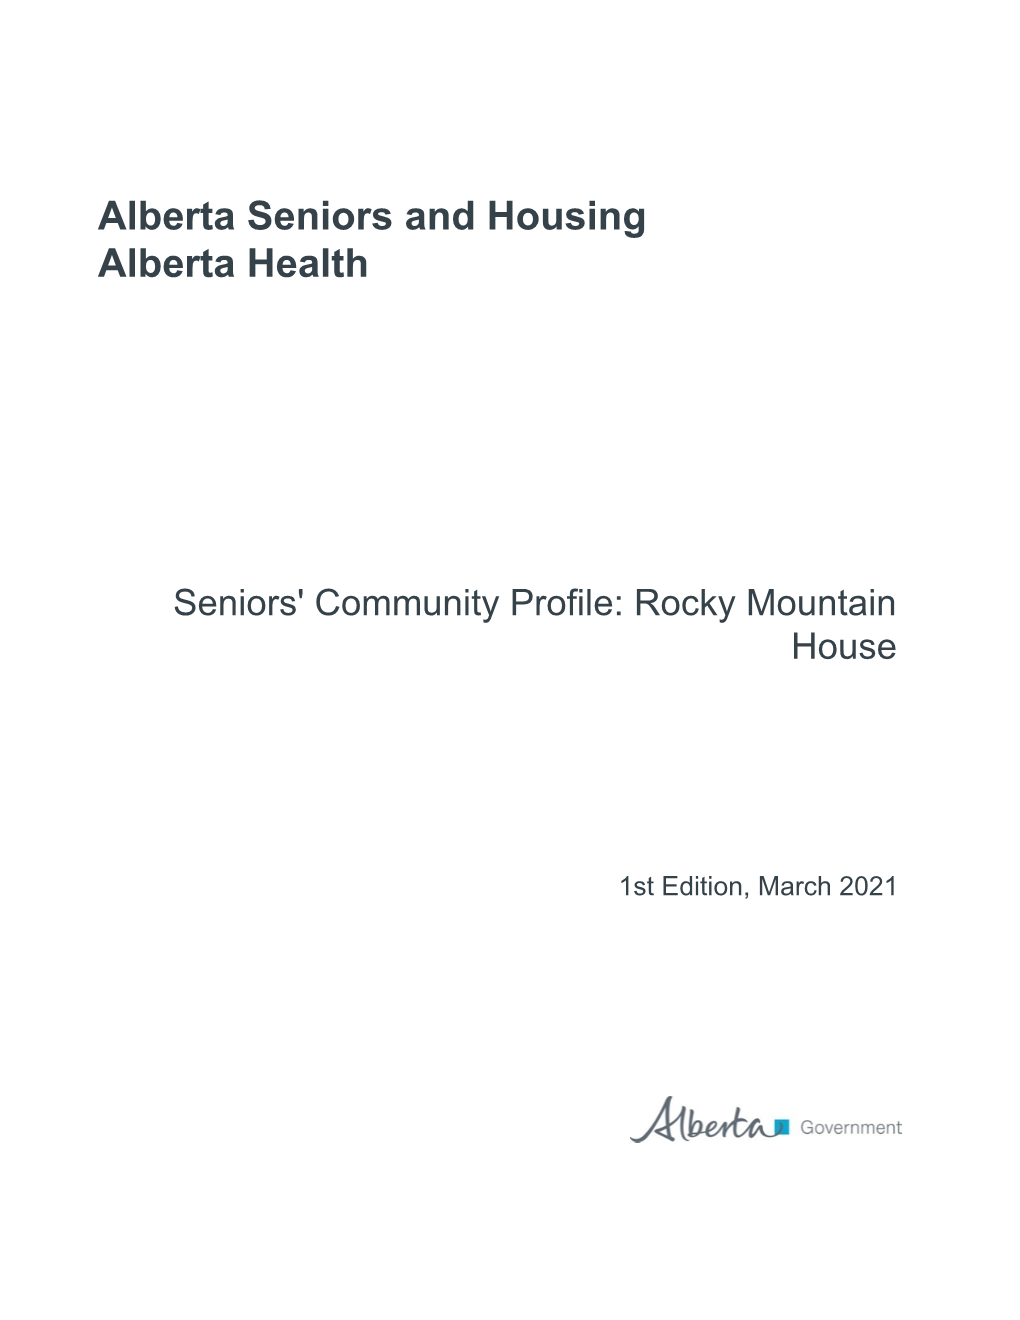 Seniors' Community Profile: Rocky Mountain House